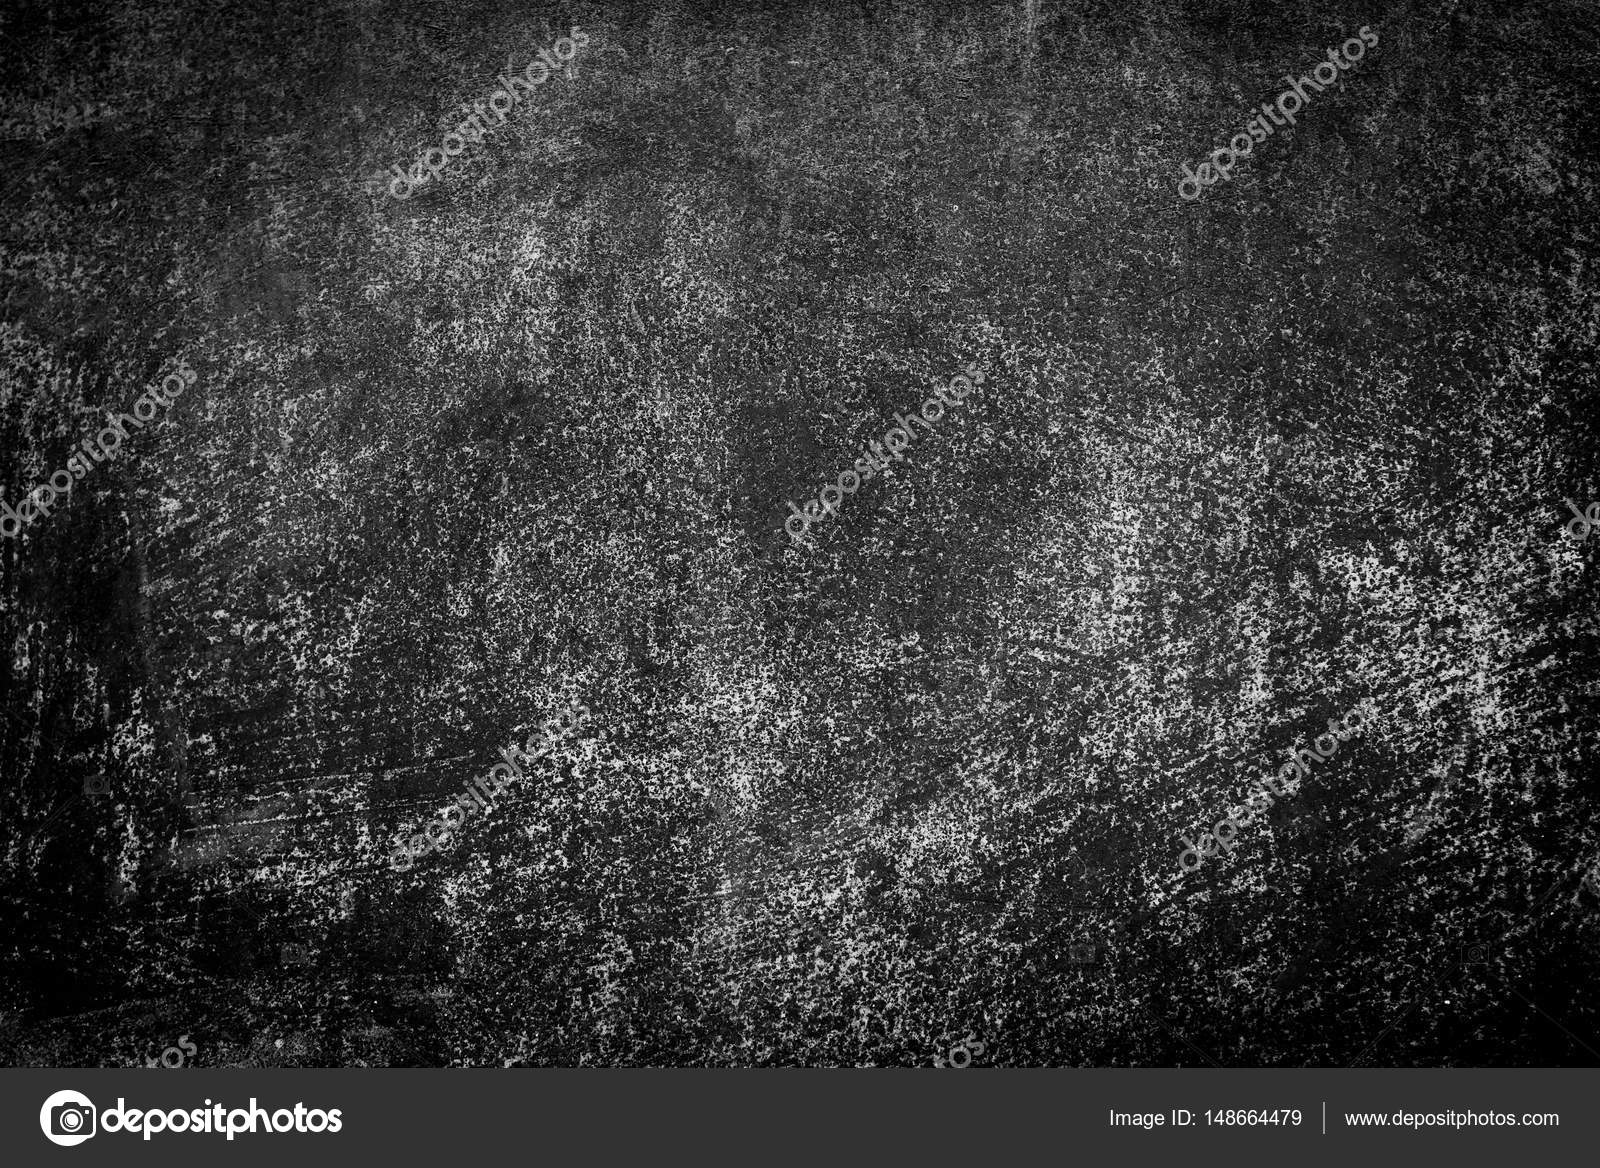 depositphotos_148664479 stock photo black chalkboard blackboard chalk texture